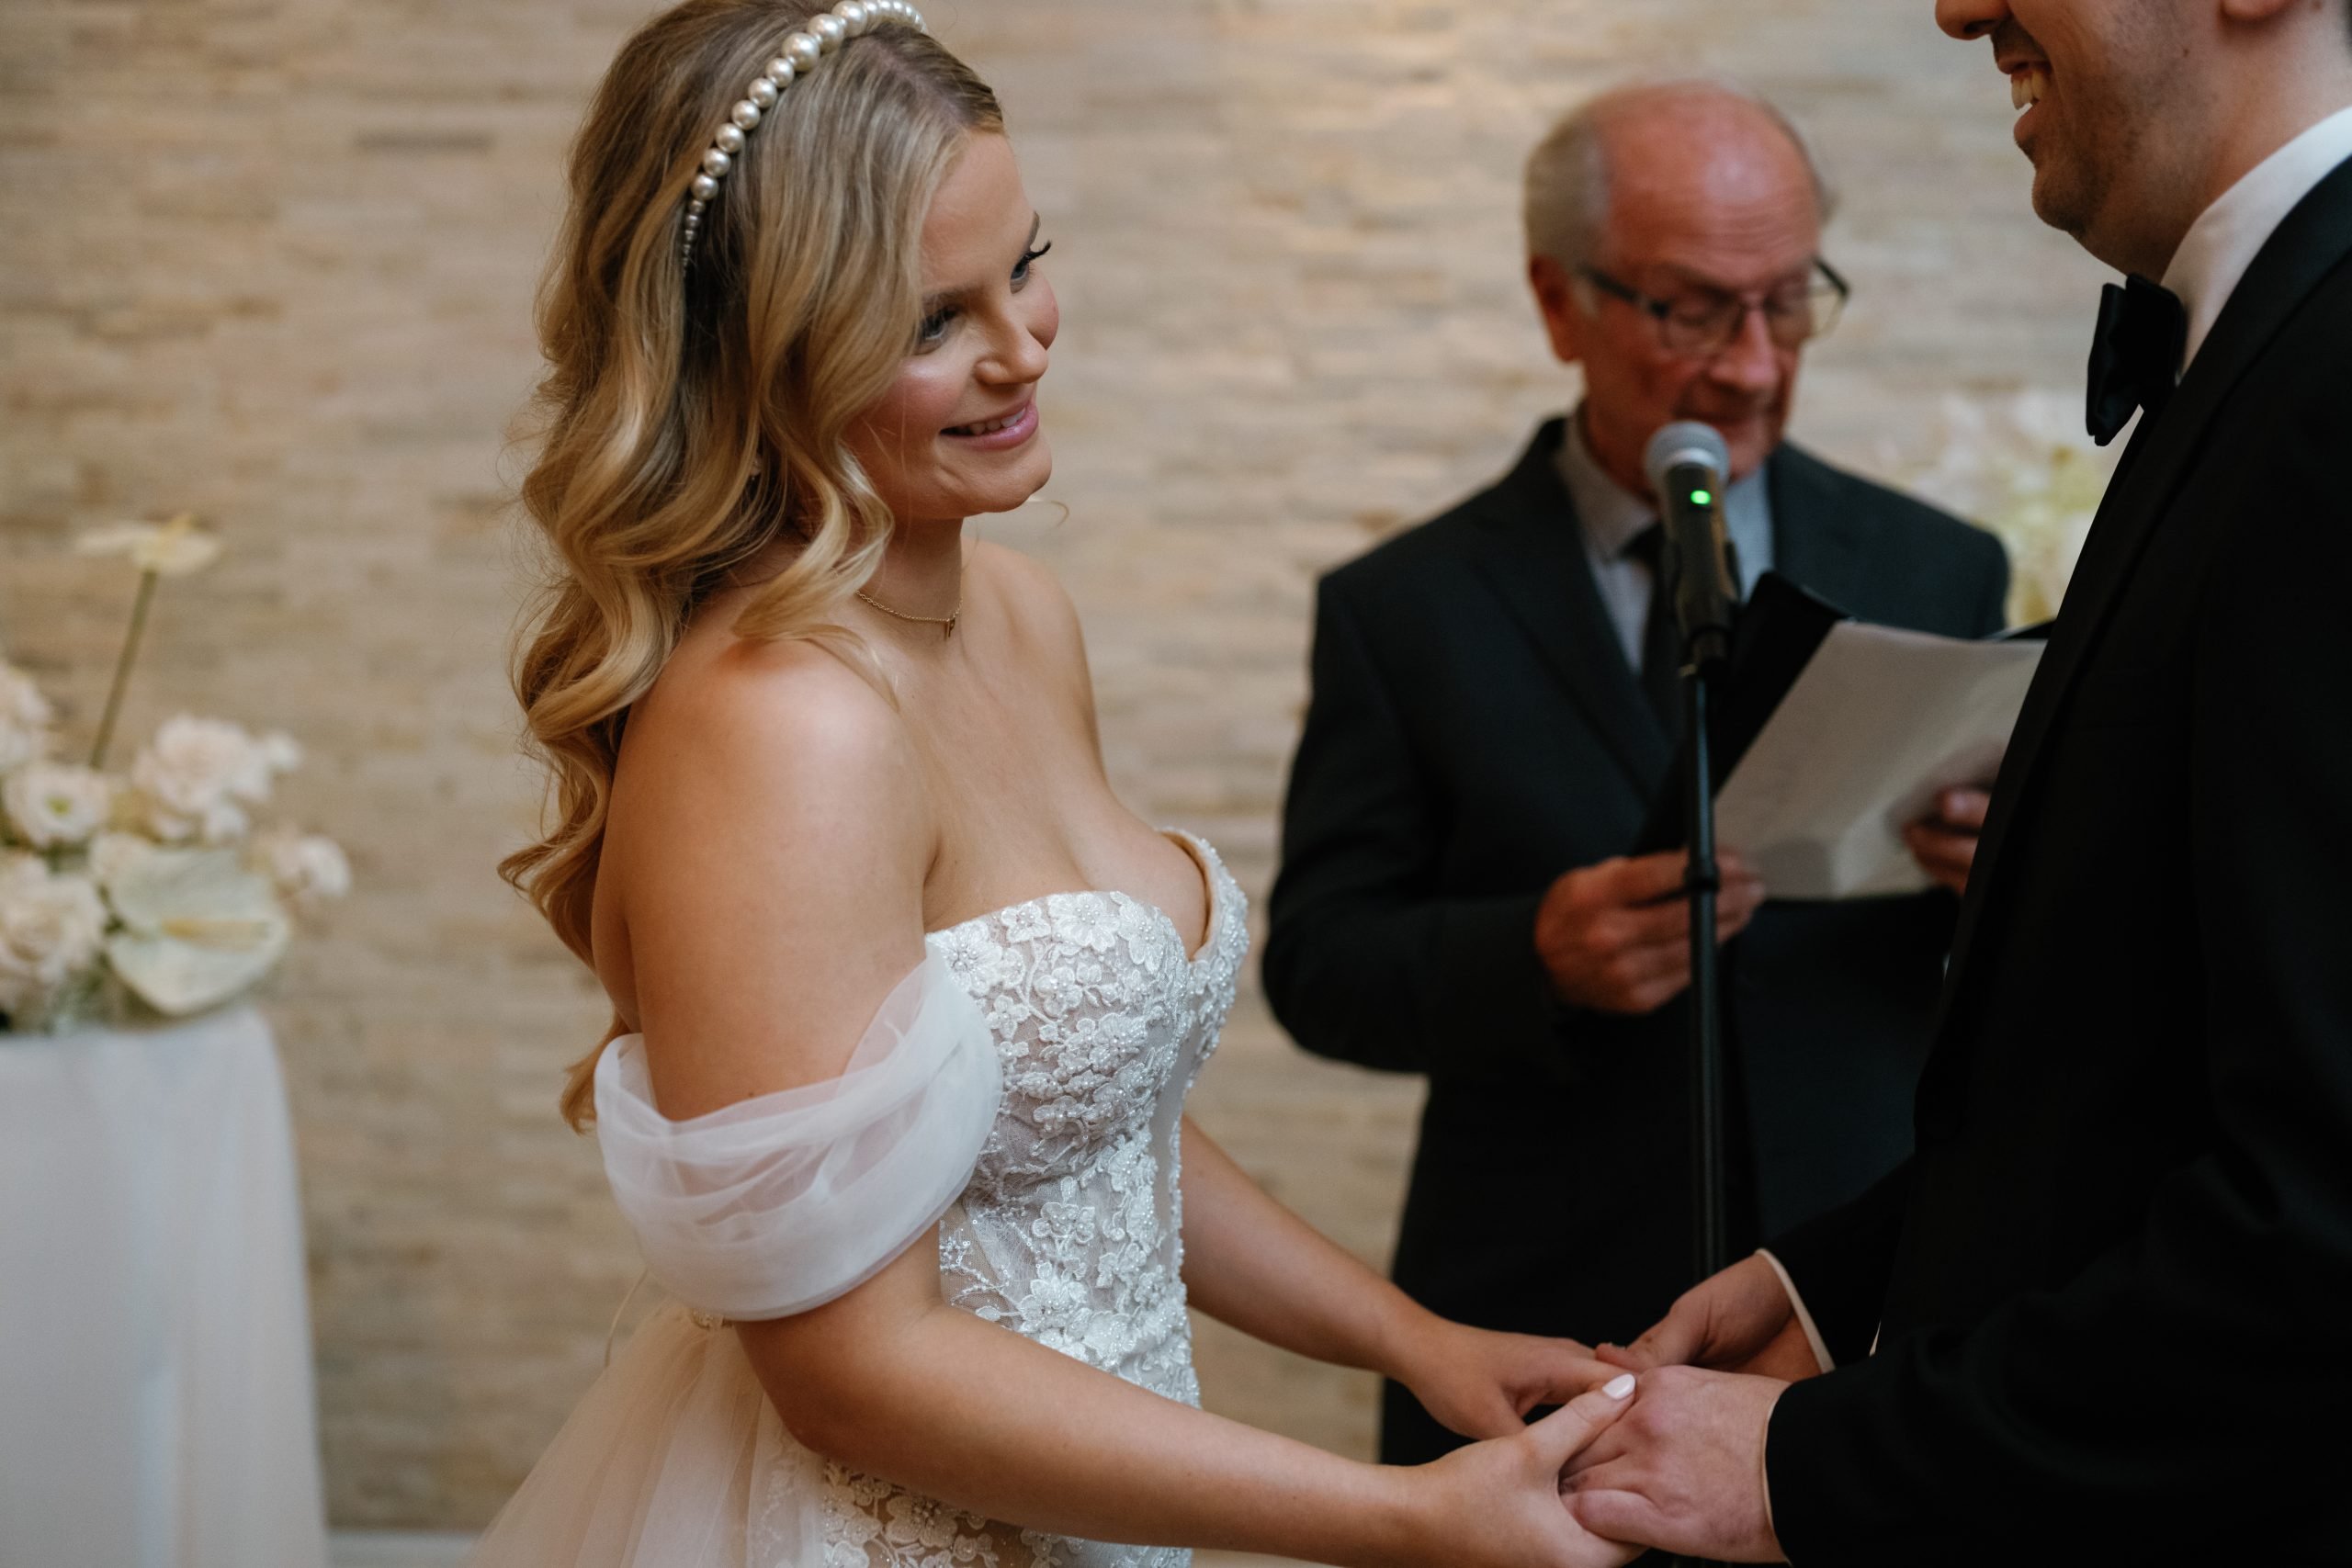 vows and ceremony at Sassafras Toronto